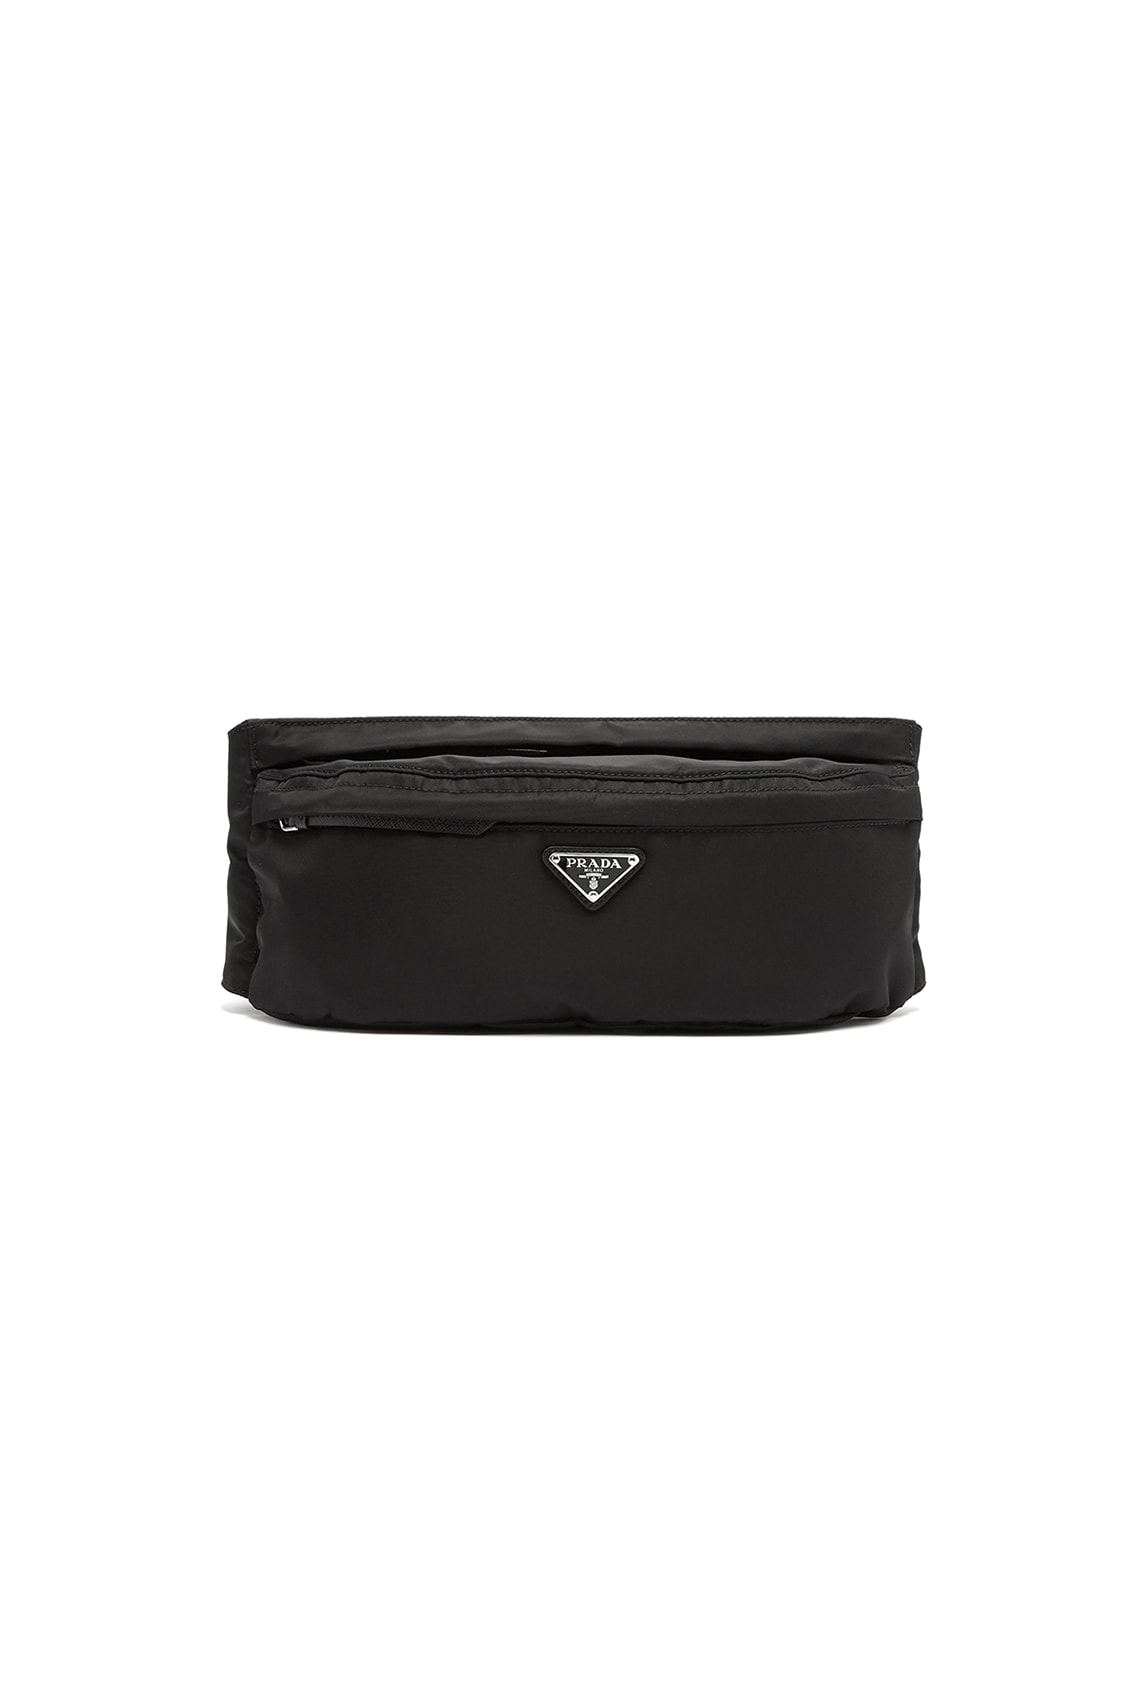 Prada Nylon Belt Bag Black